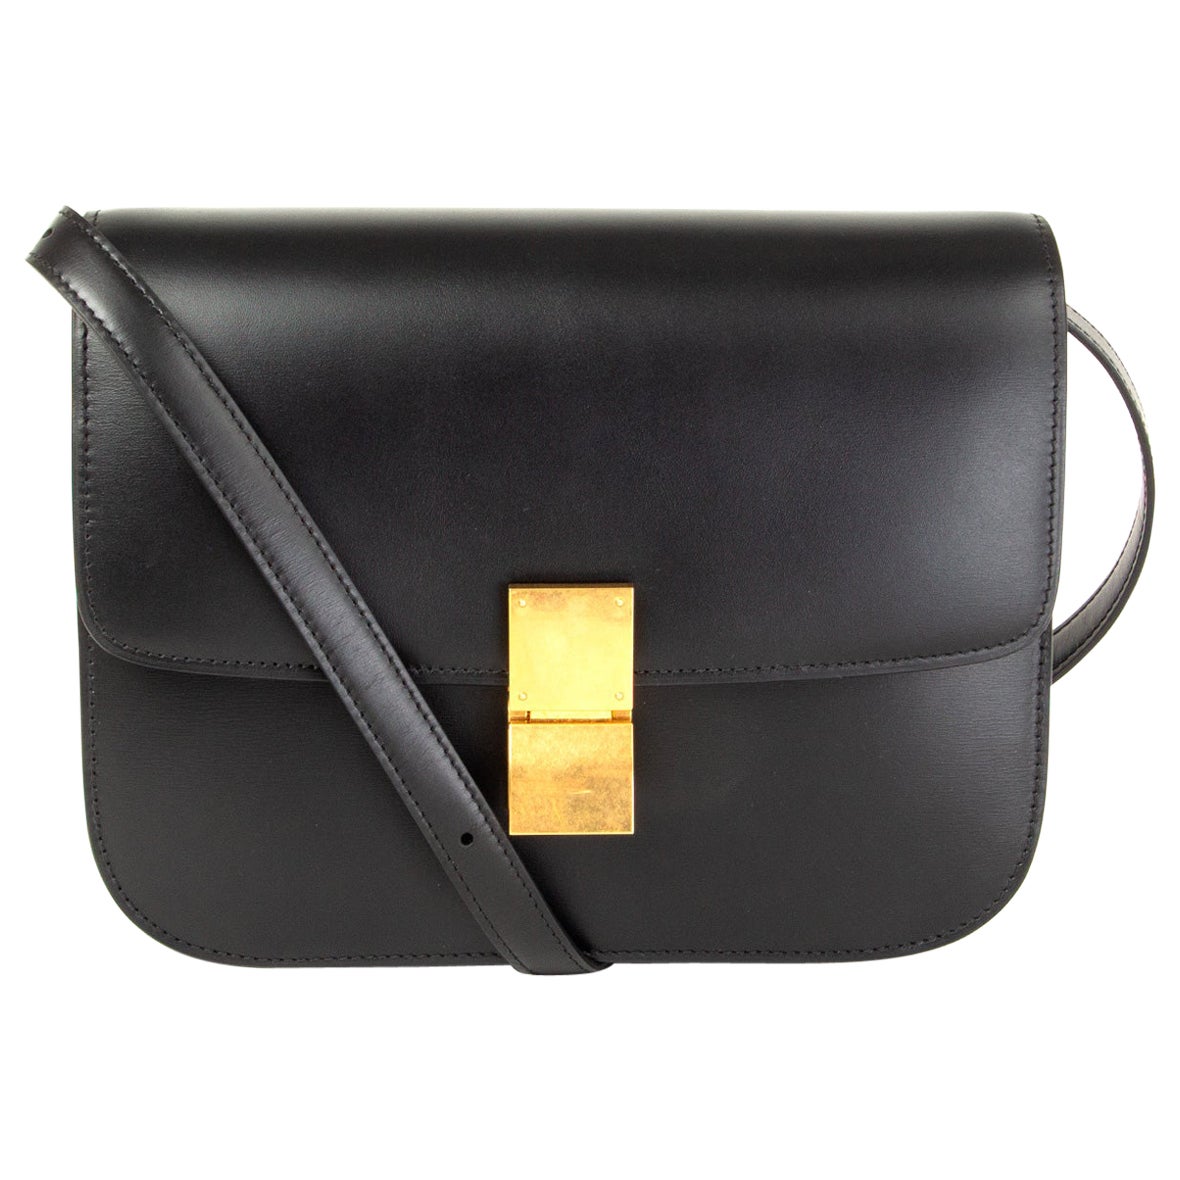 CELINE black leather MEDIUM CLASSIC BOX Shoulder Bag